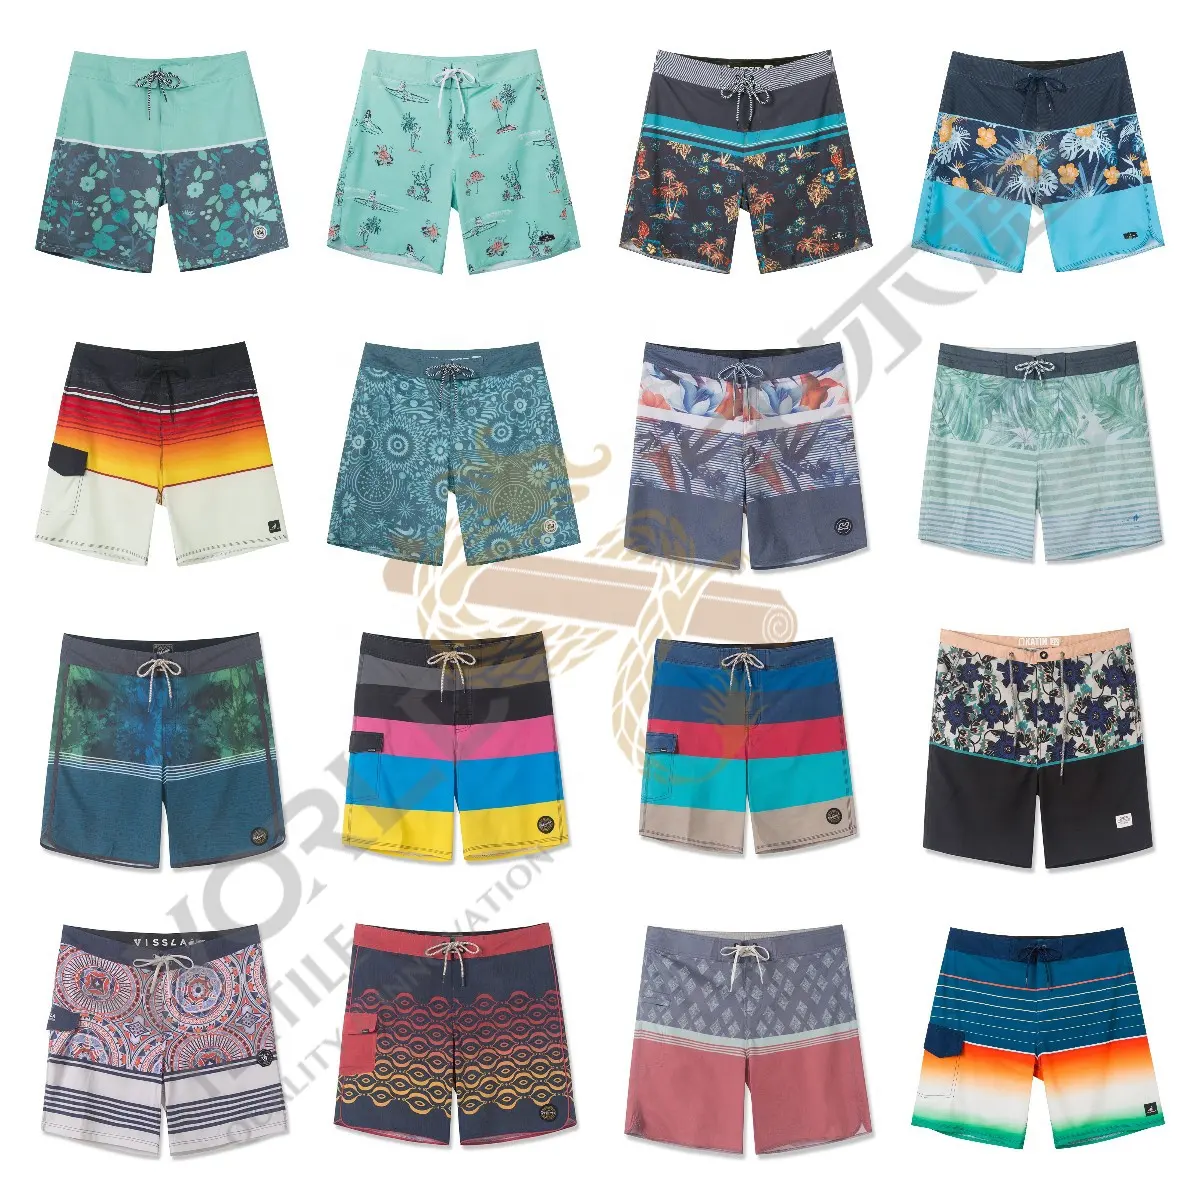 Design your own logo hurley swim trunks wholesale custom mens beach shorts 4 way stretch board shorts